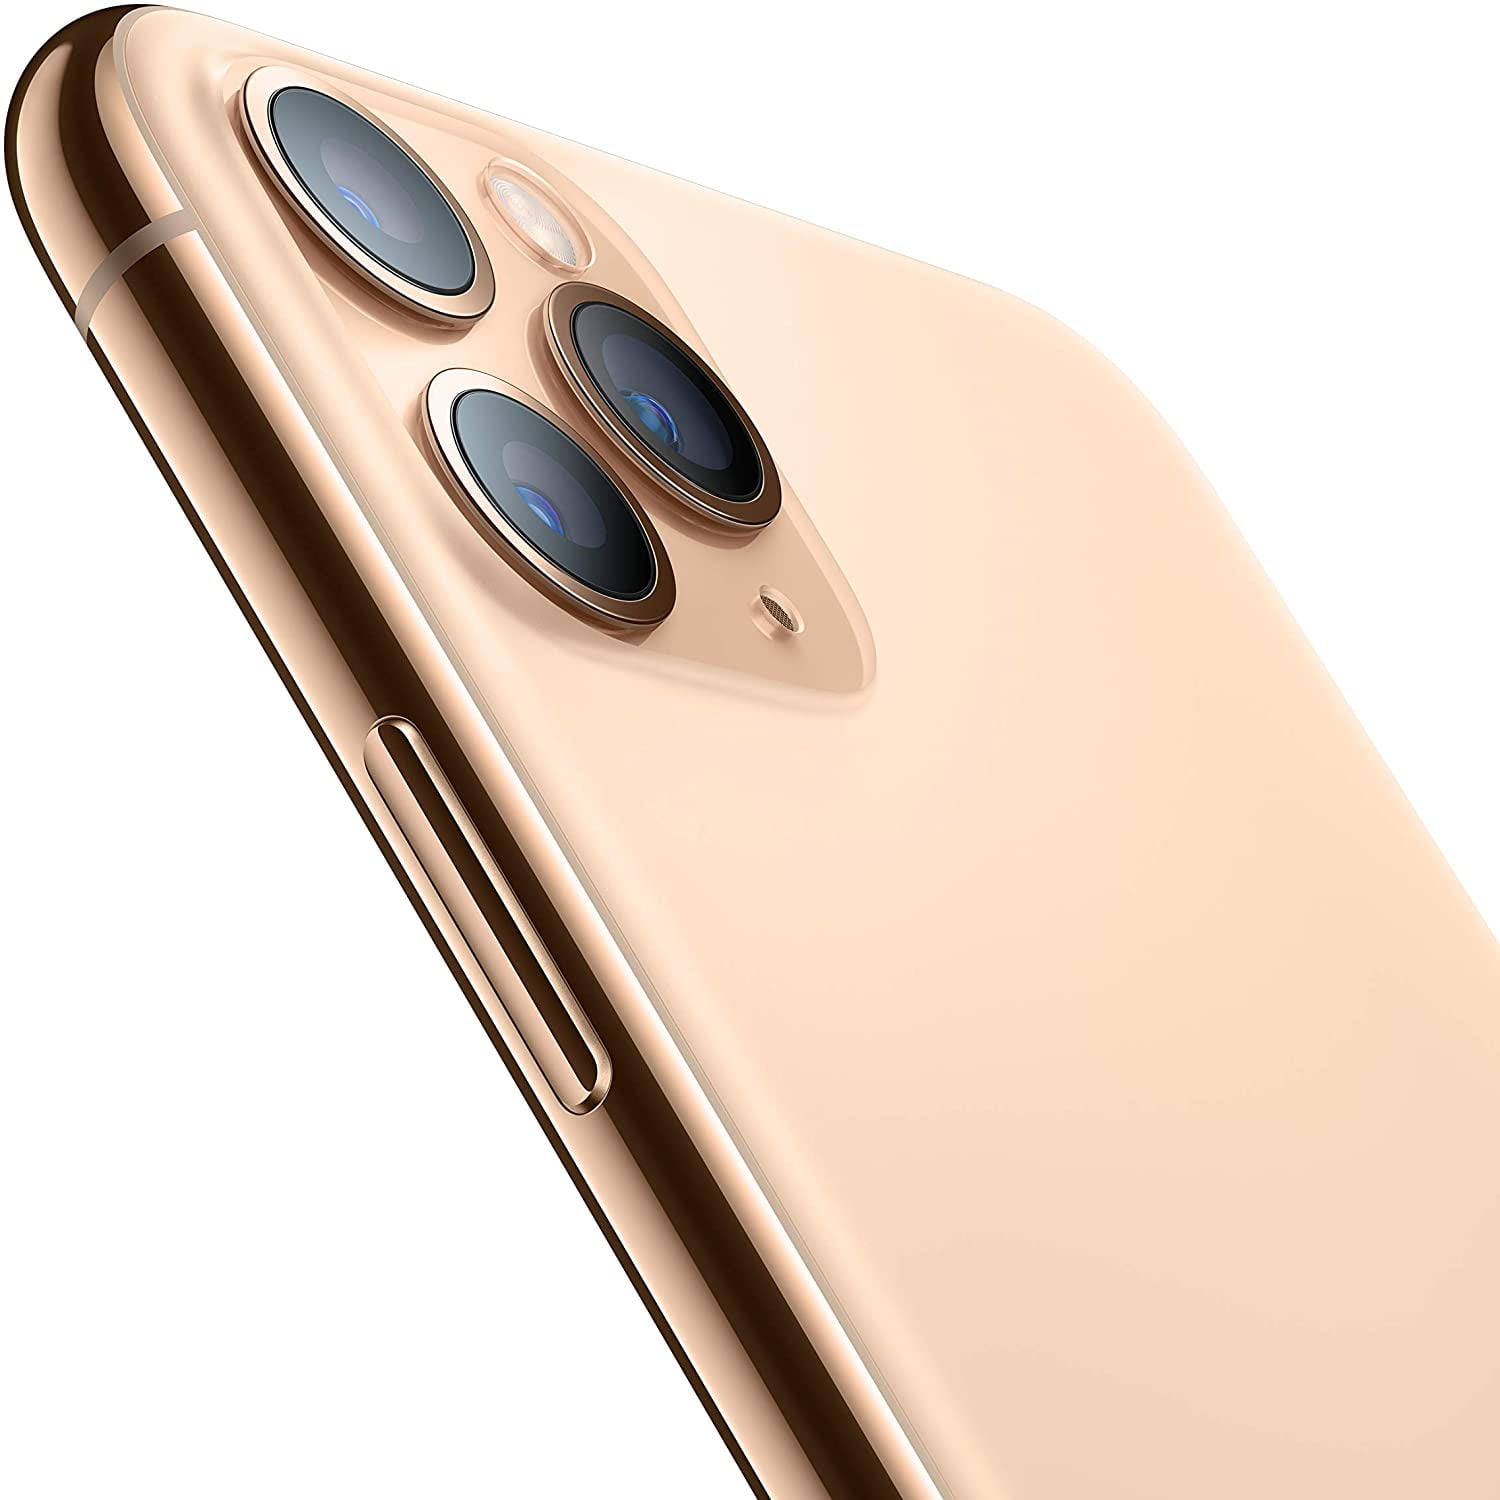 Apple iPhone 11 Pro Max 256GB, Gold - Unlocked - Walmart.com